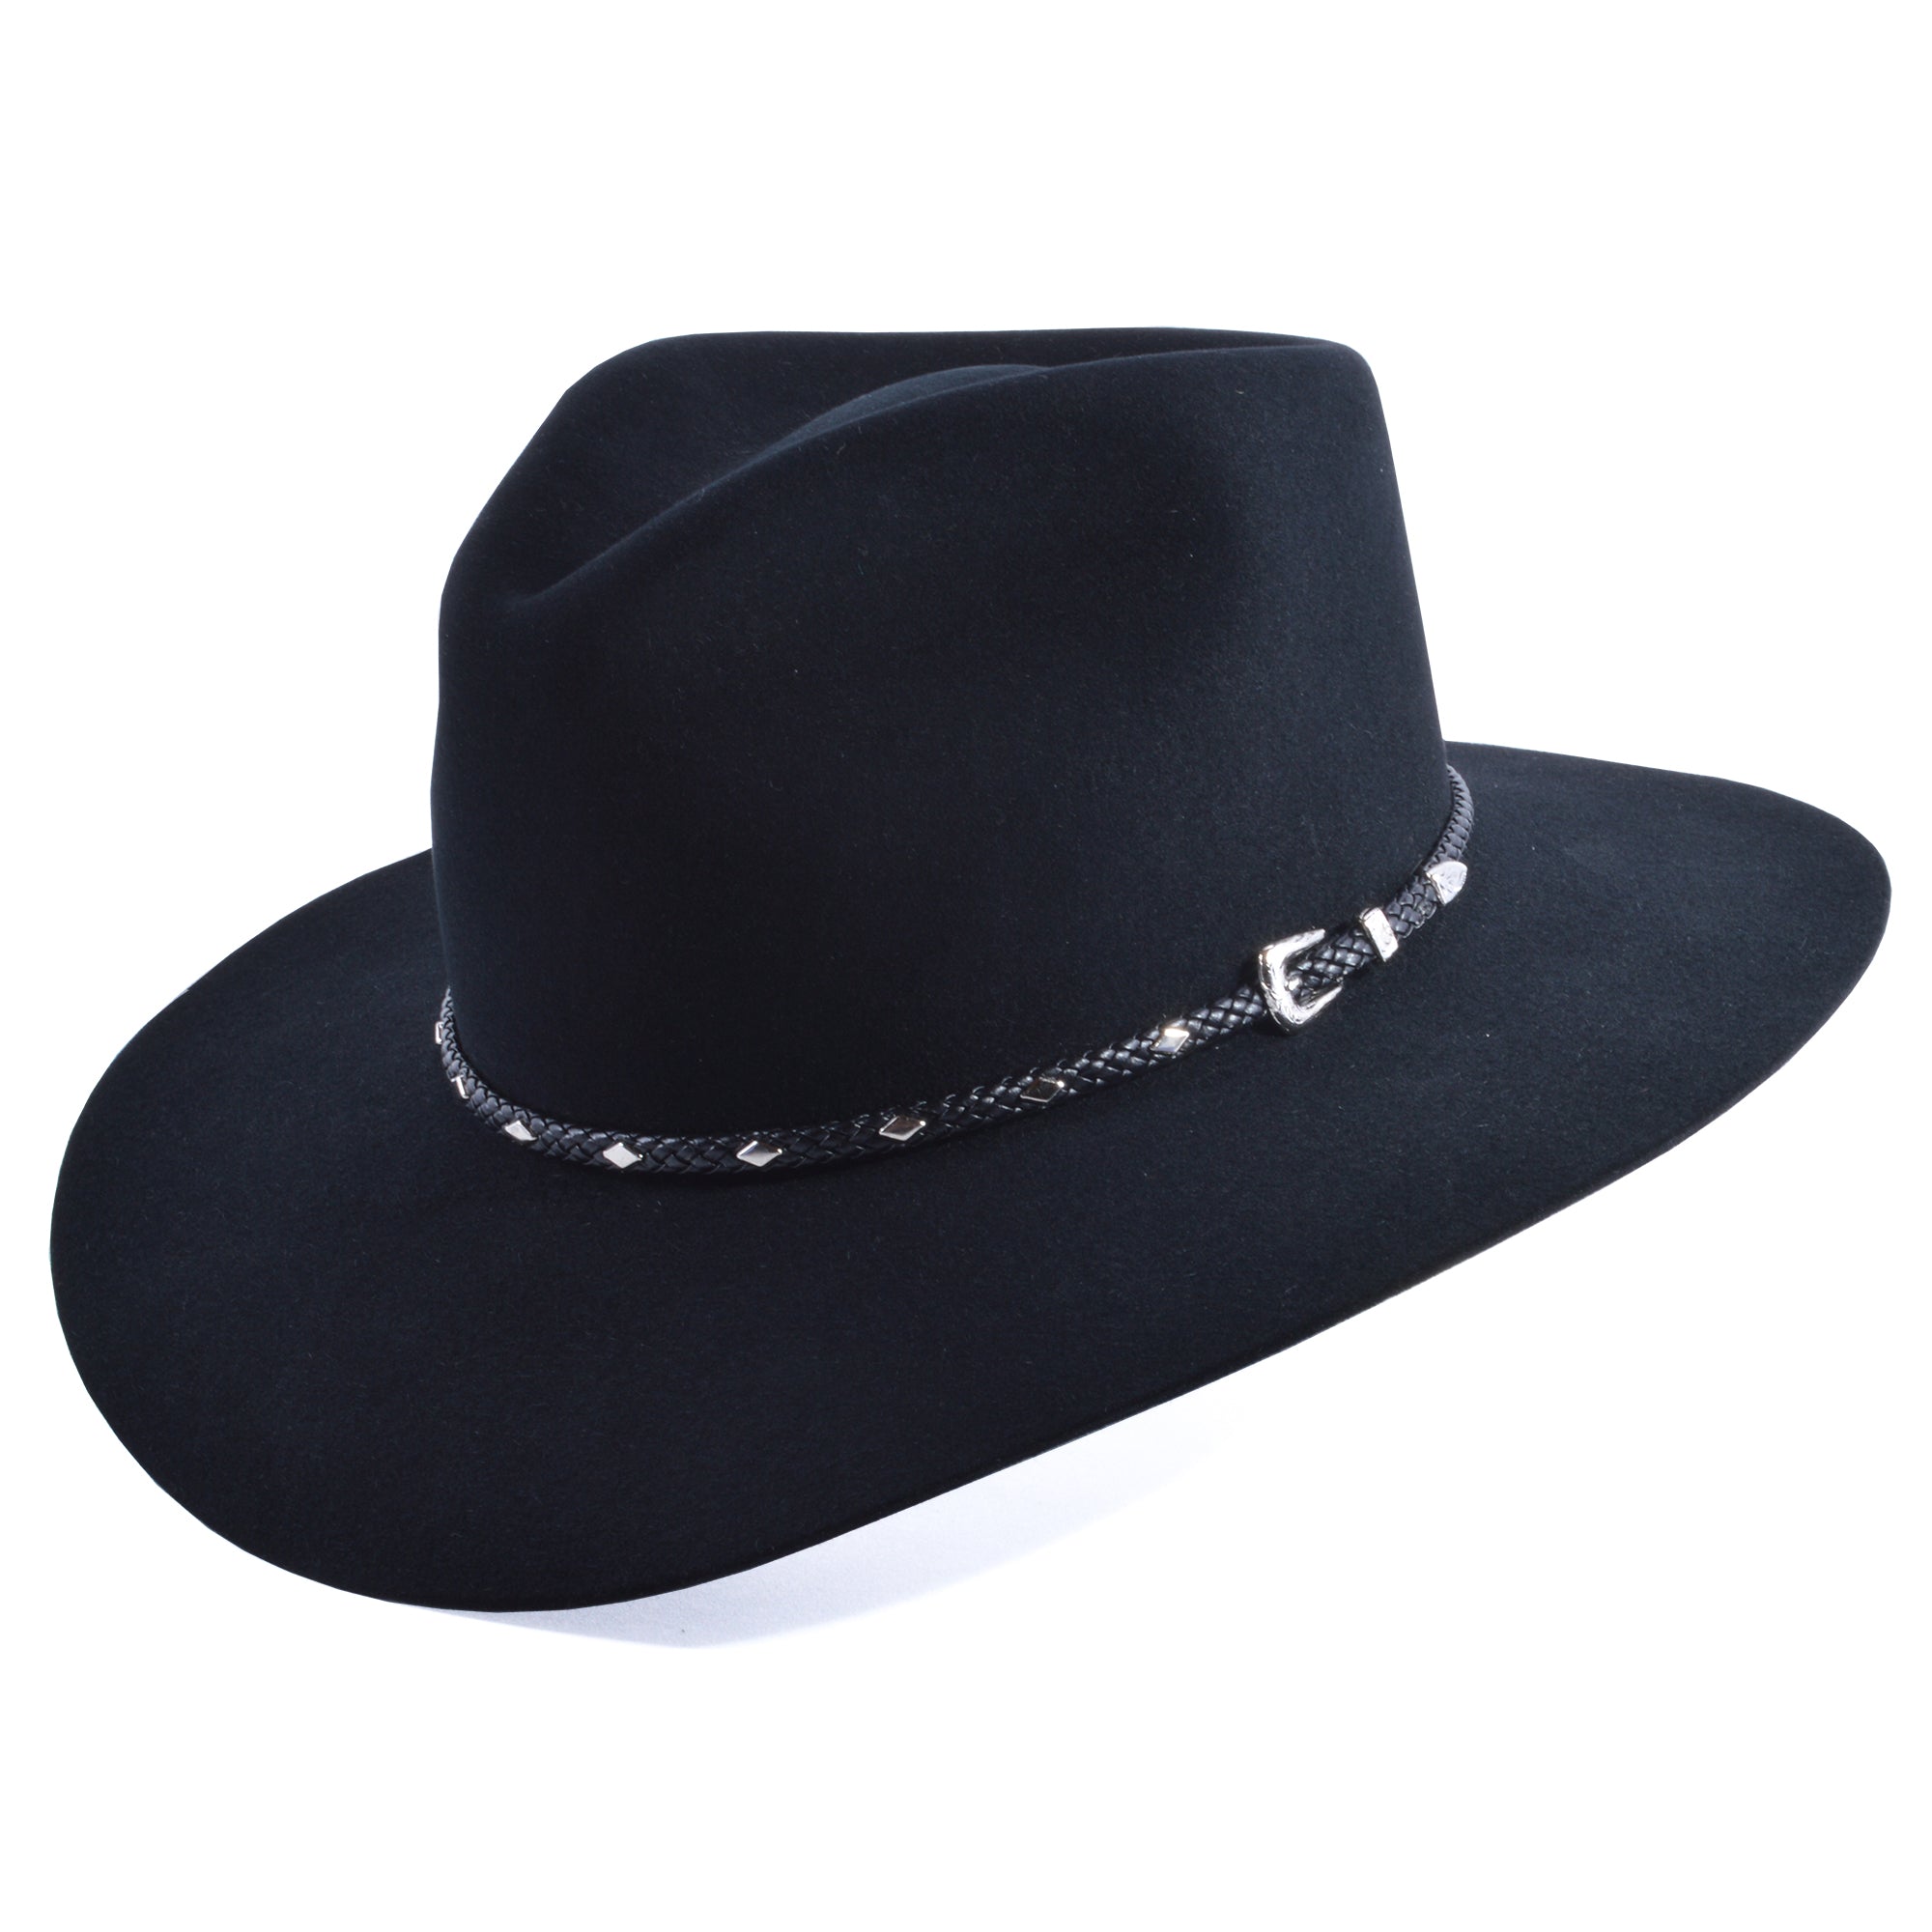 Stetson 5X Fur Felt Diamond Jim Hat with Hat Box